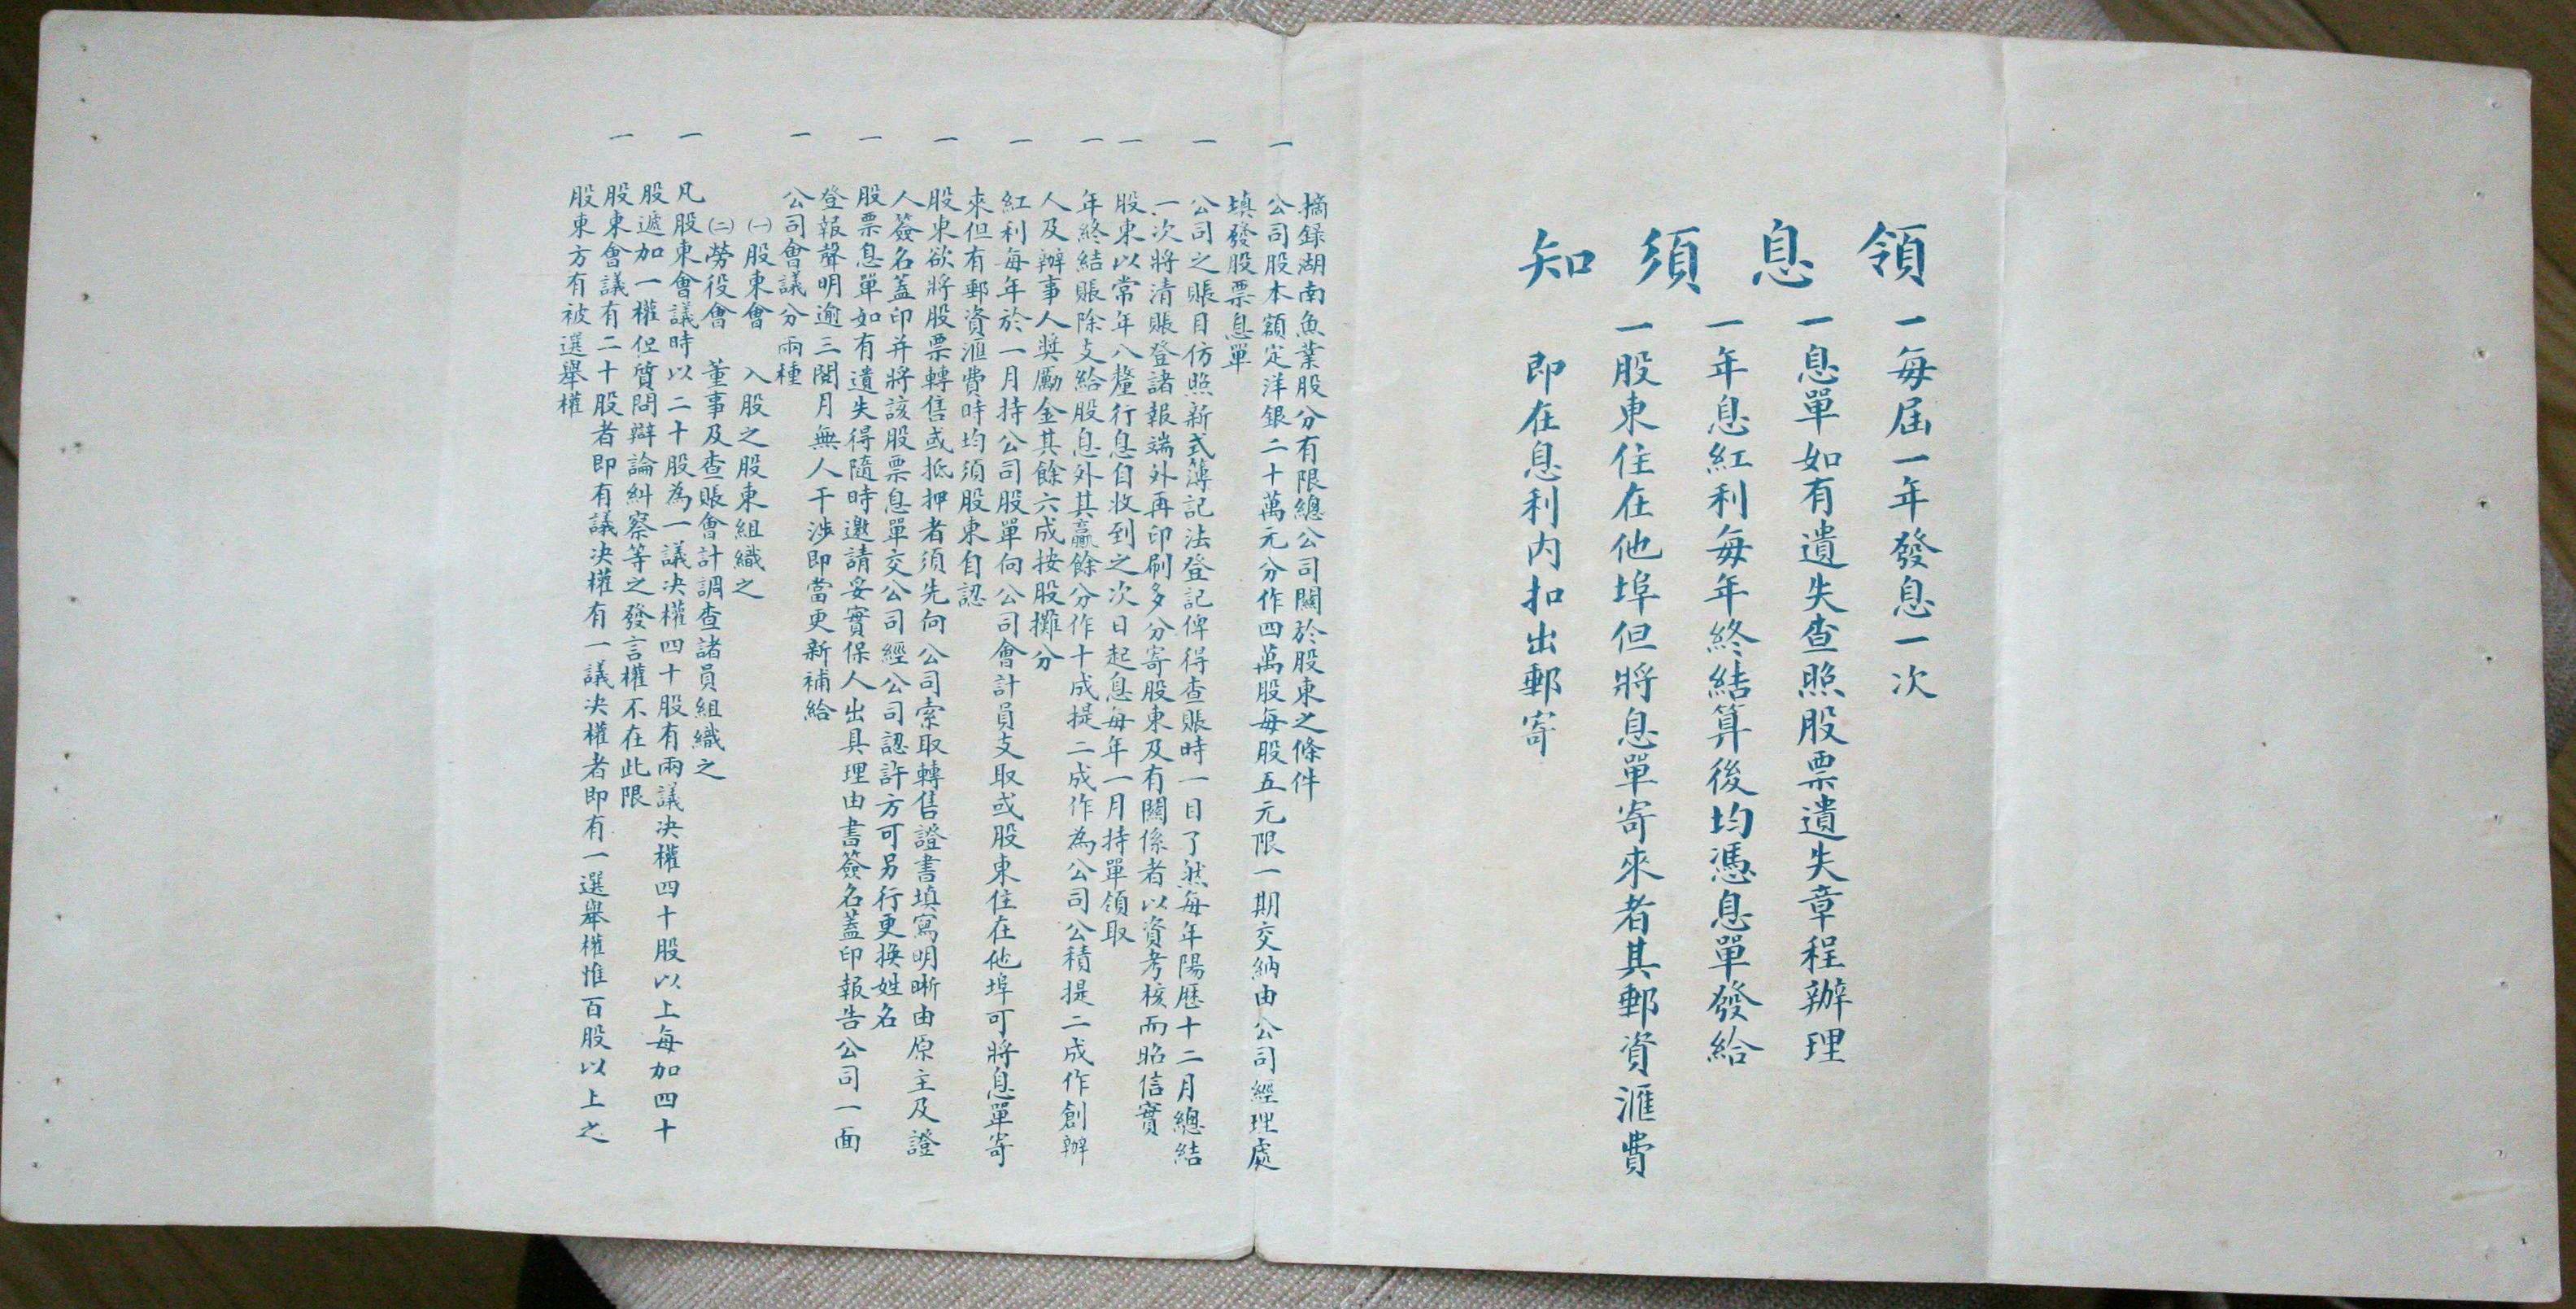 S0170, Hunan Province Fishery Co., Ltd, Stock Certificate of China 1920